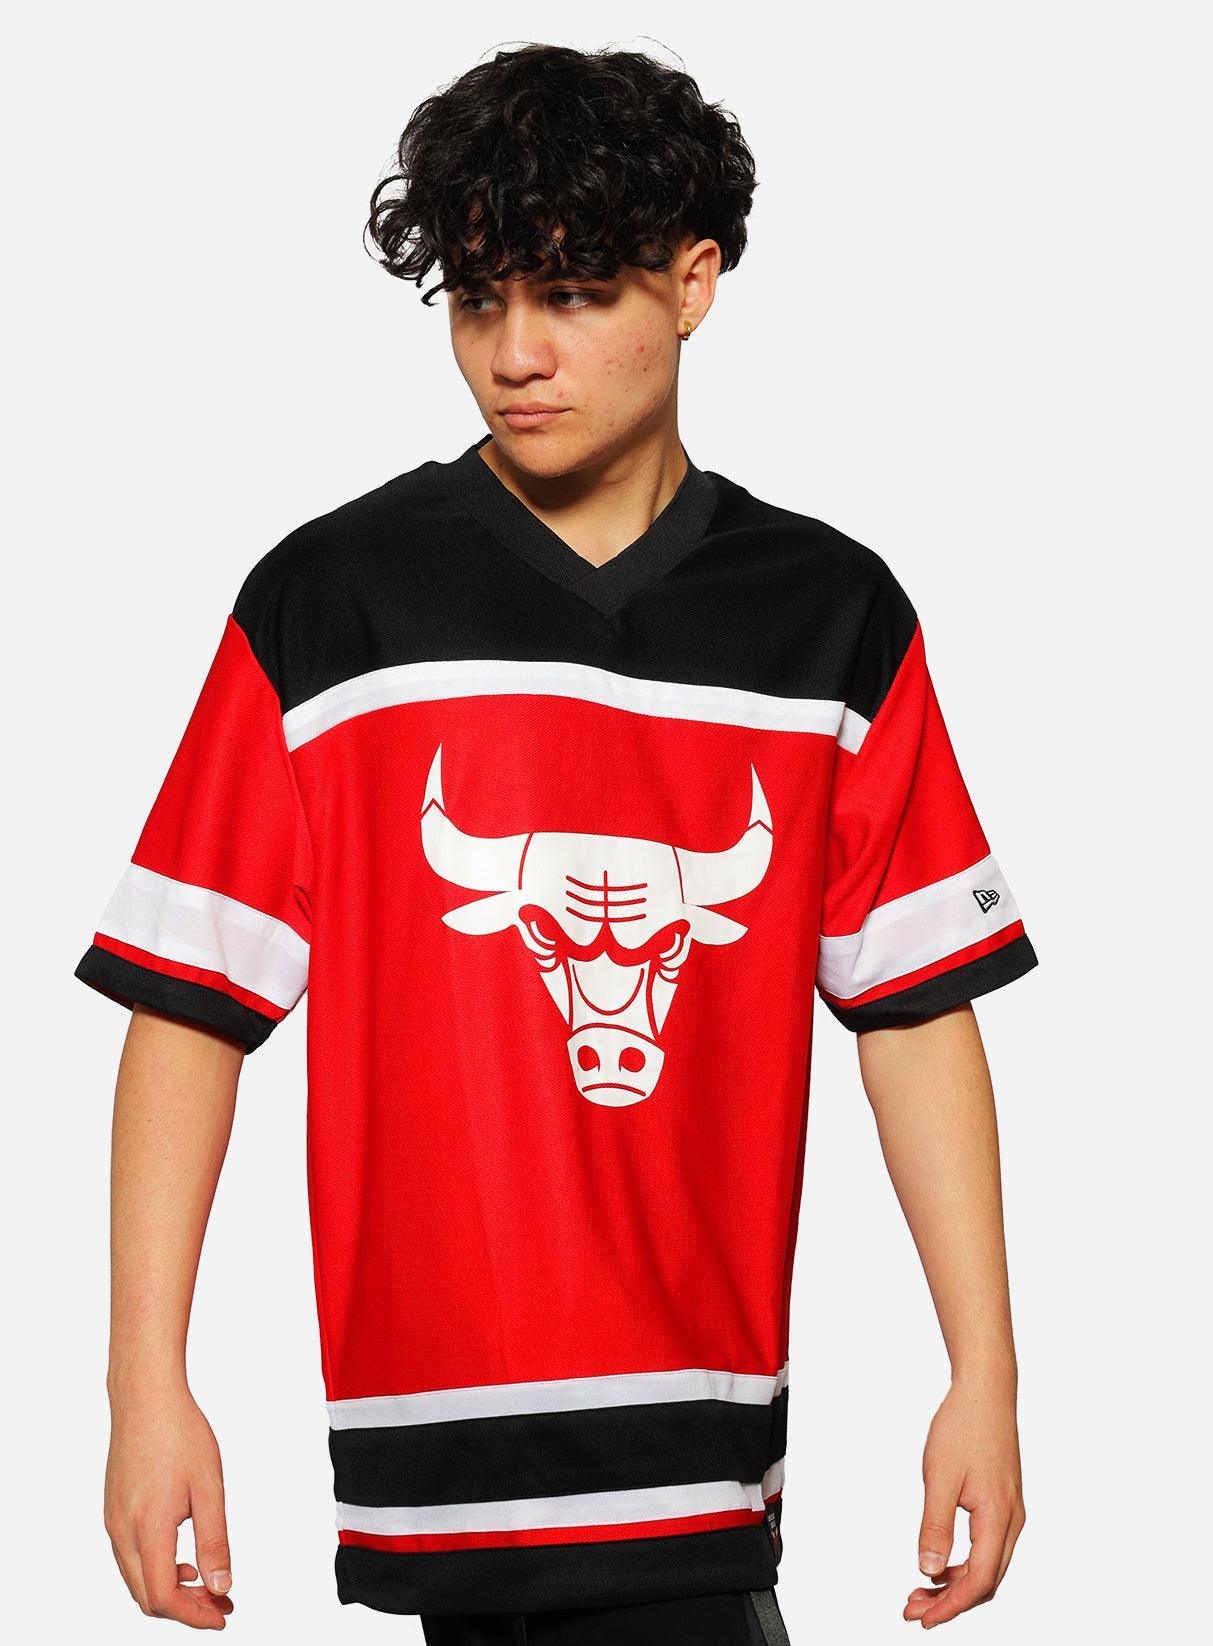 New Era Chicago Bulls oversized mesh t-shirt in black